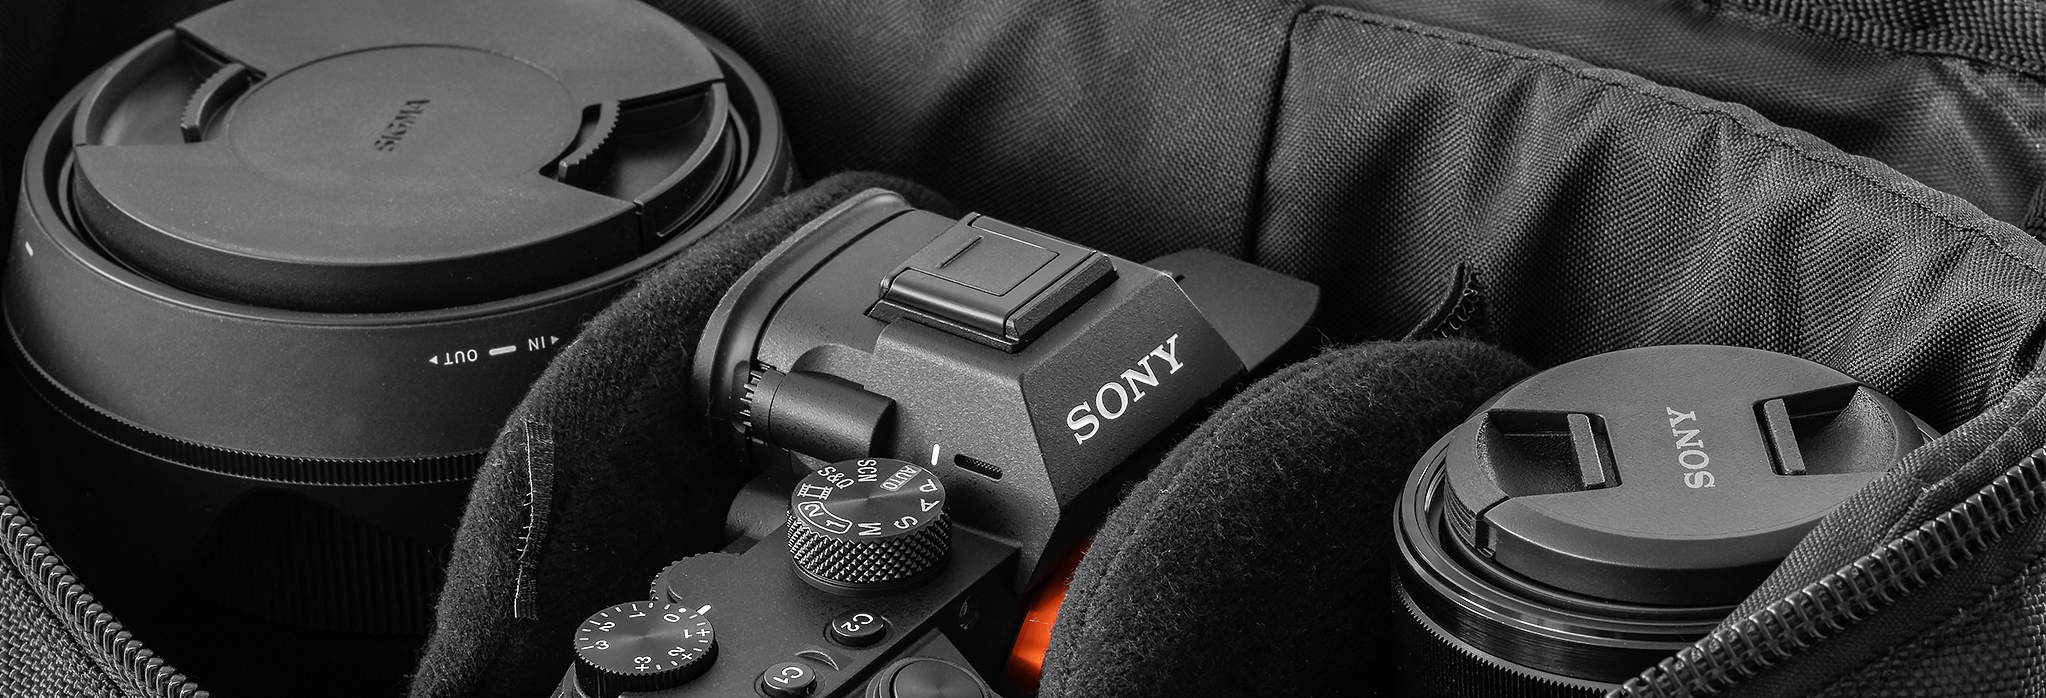 Sony-Kamera